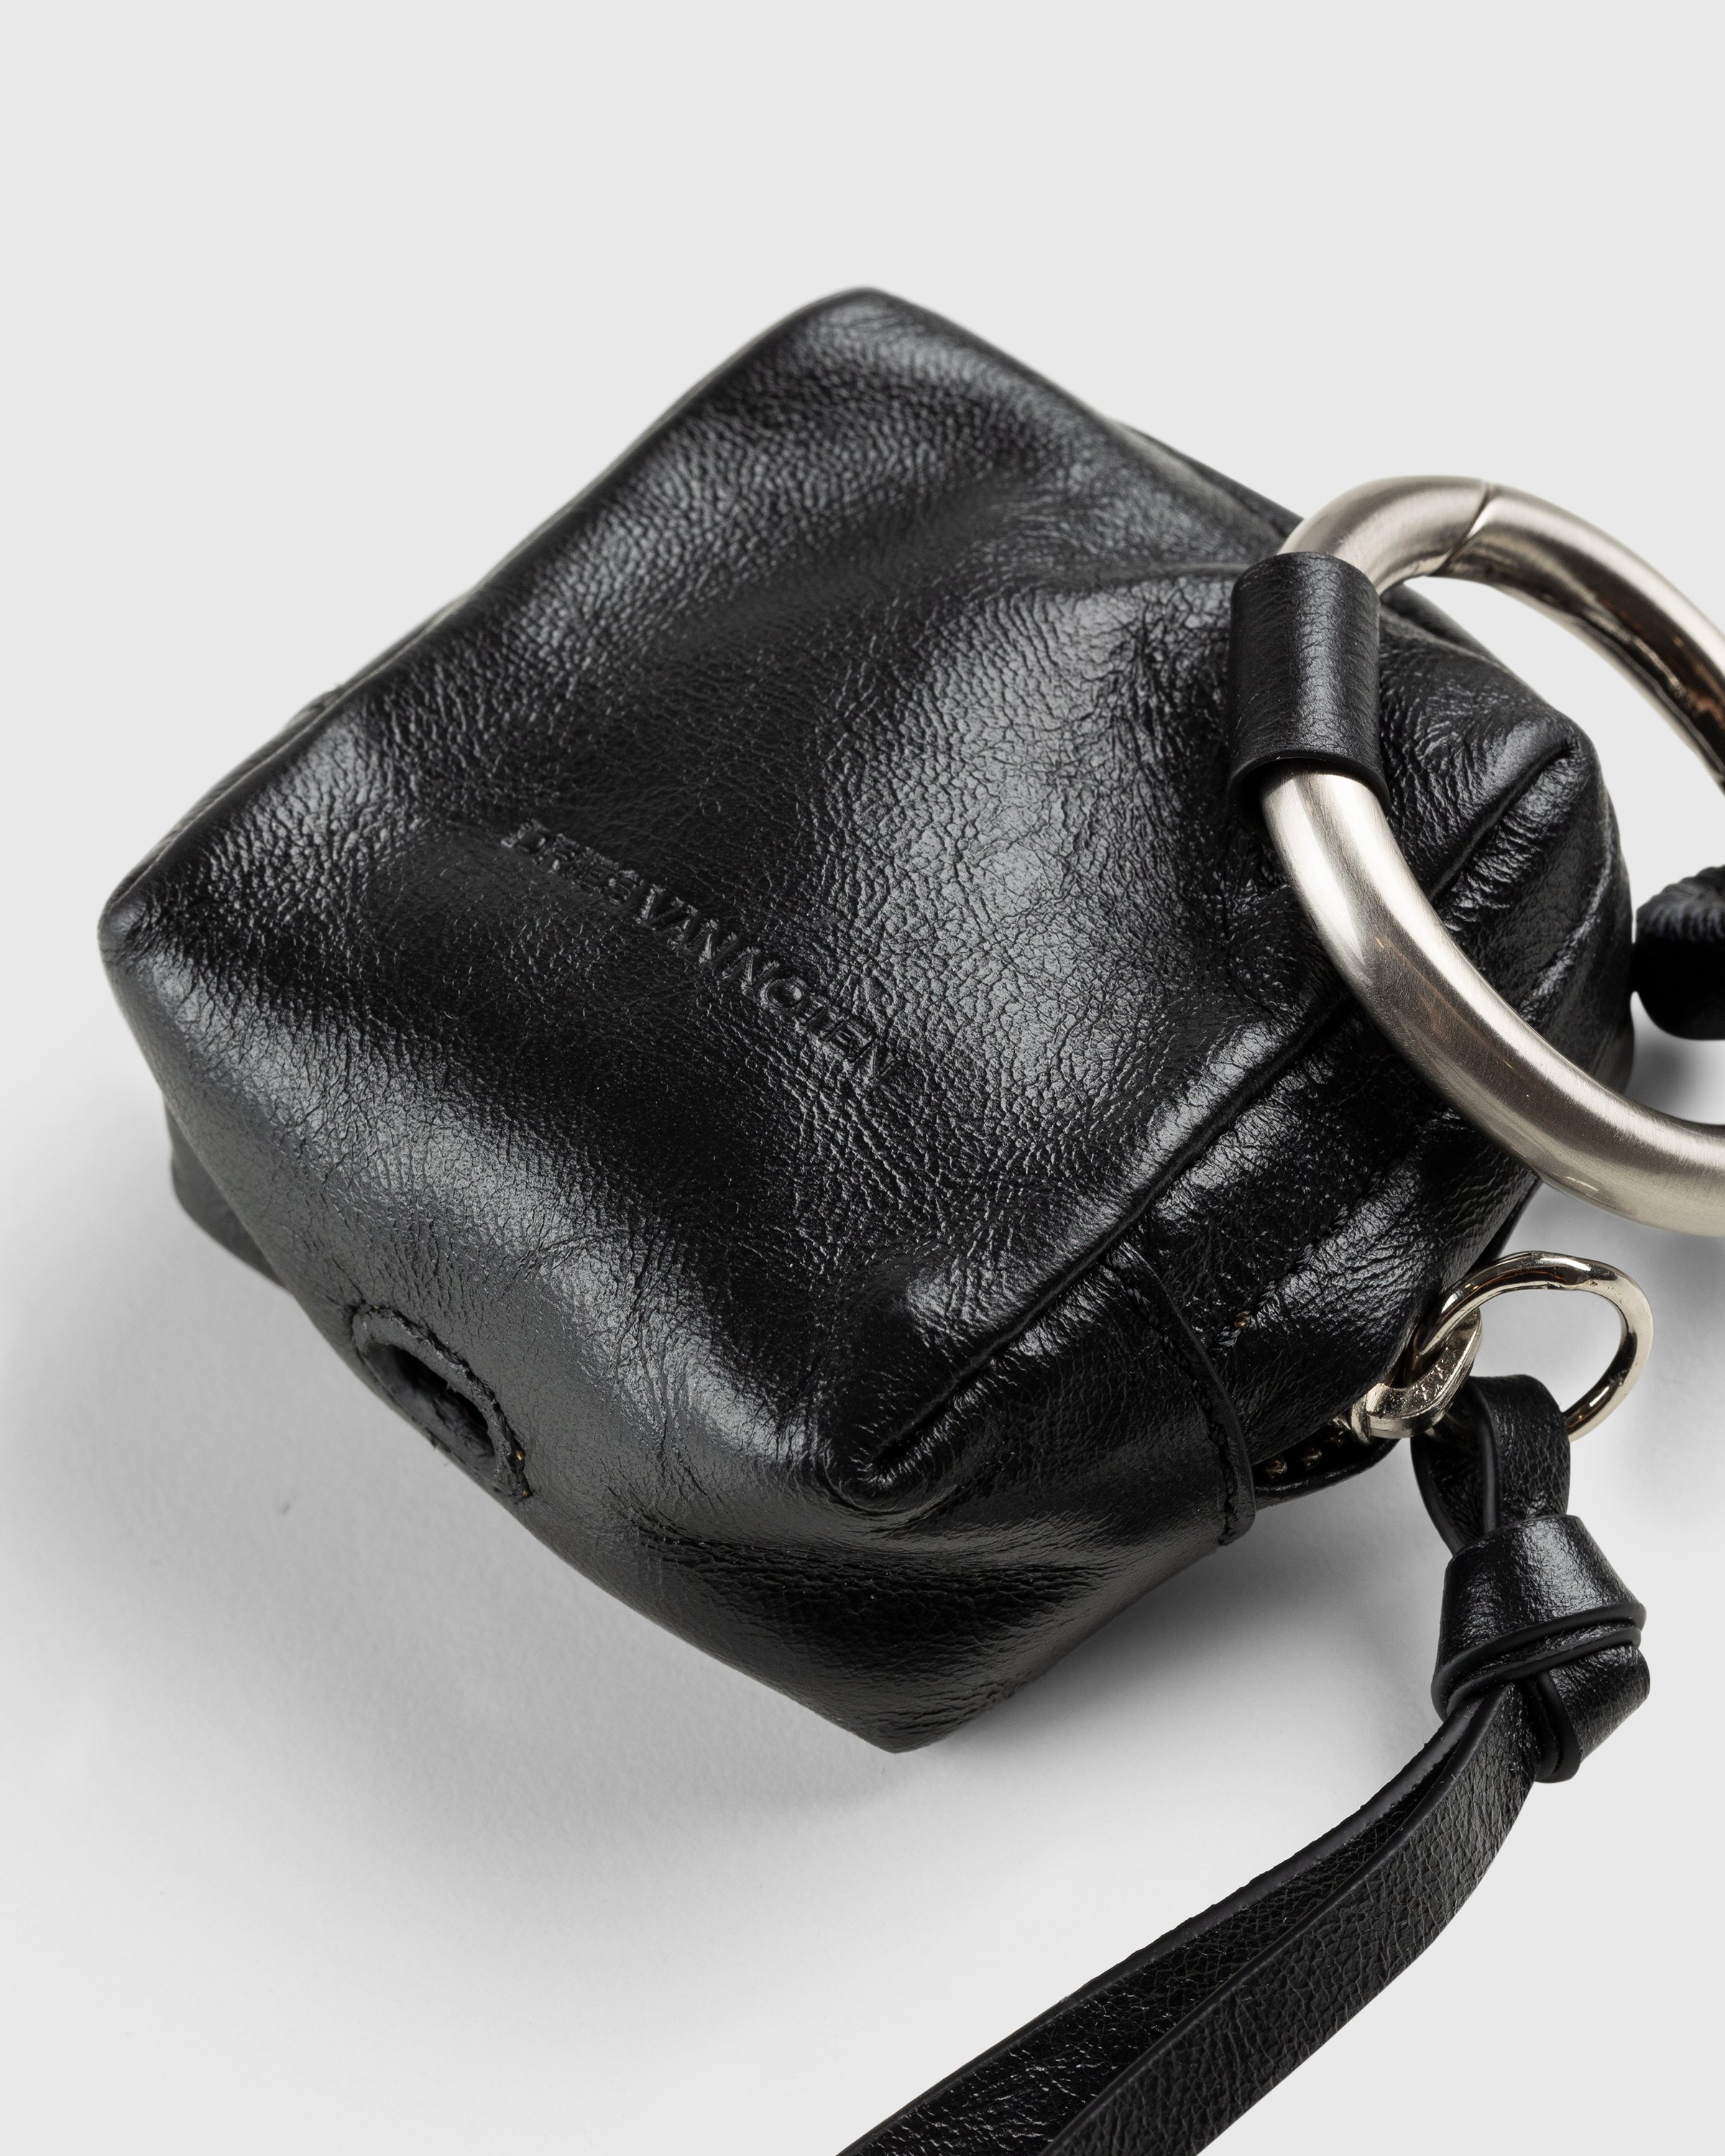 Dries van Noten - Leather AirPods Case Black - Accessories - Black - Image 2